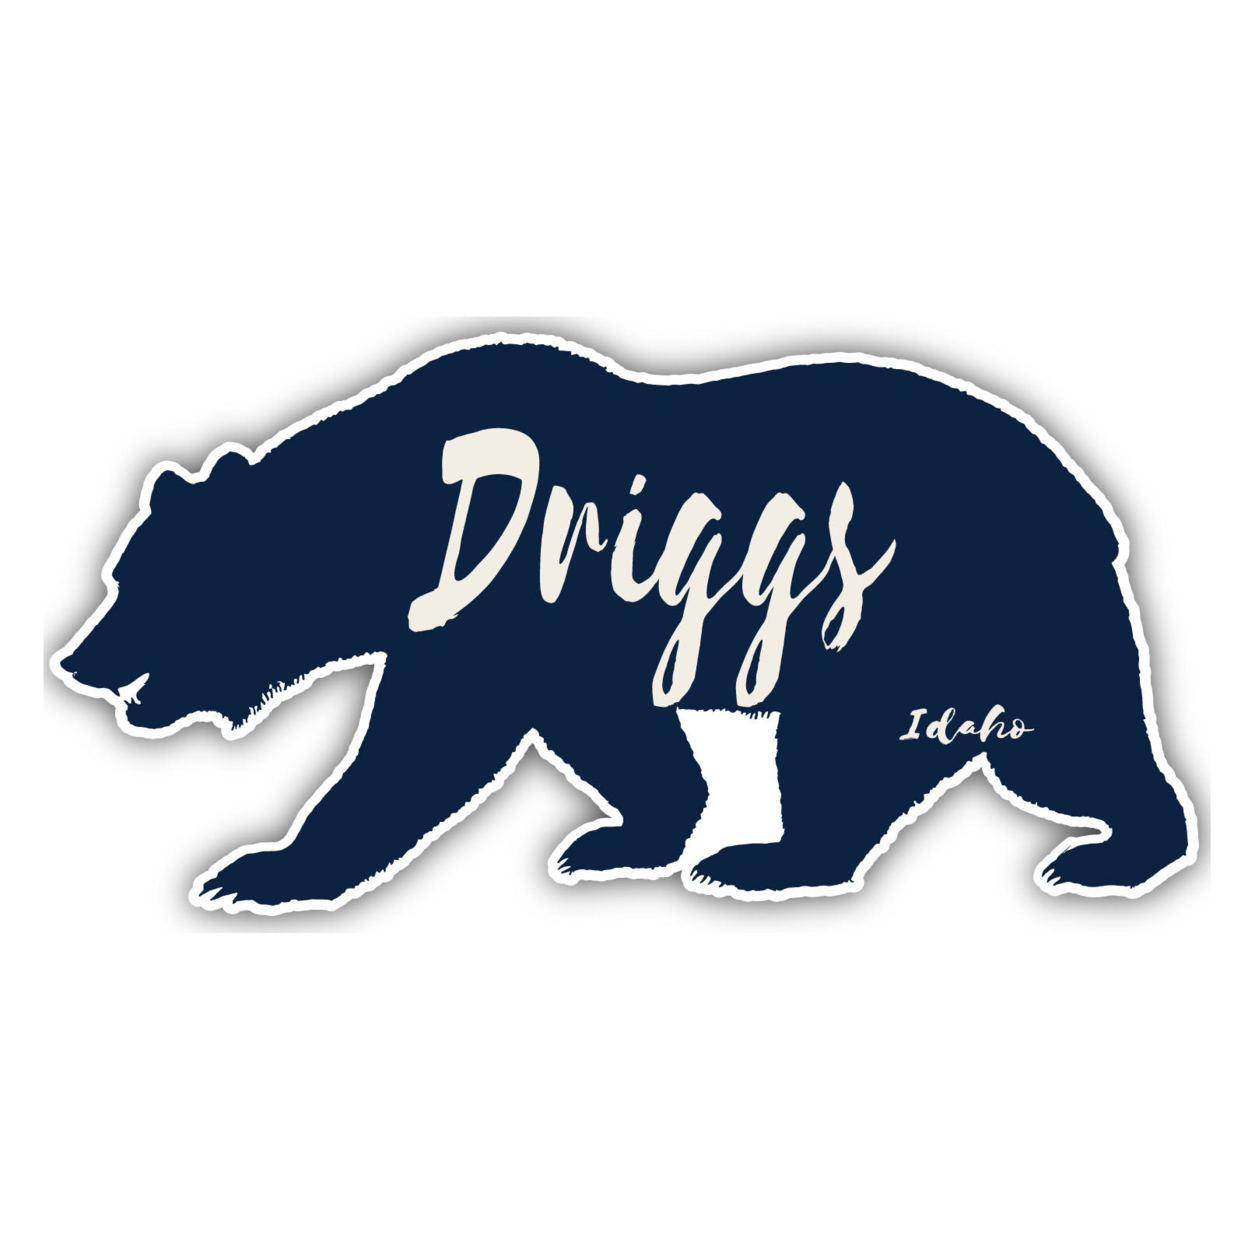 Driggs Idaho Souvenir Decorative Stickers (Choose Theme And Size) - Single Unit, 4-Inch, Bear